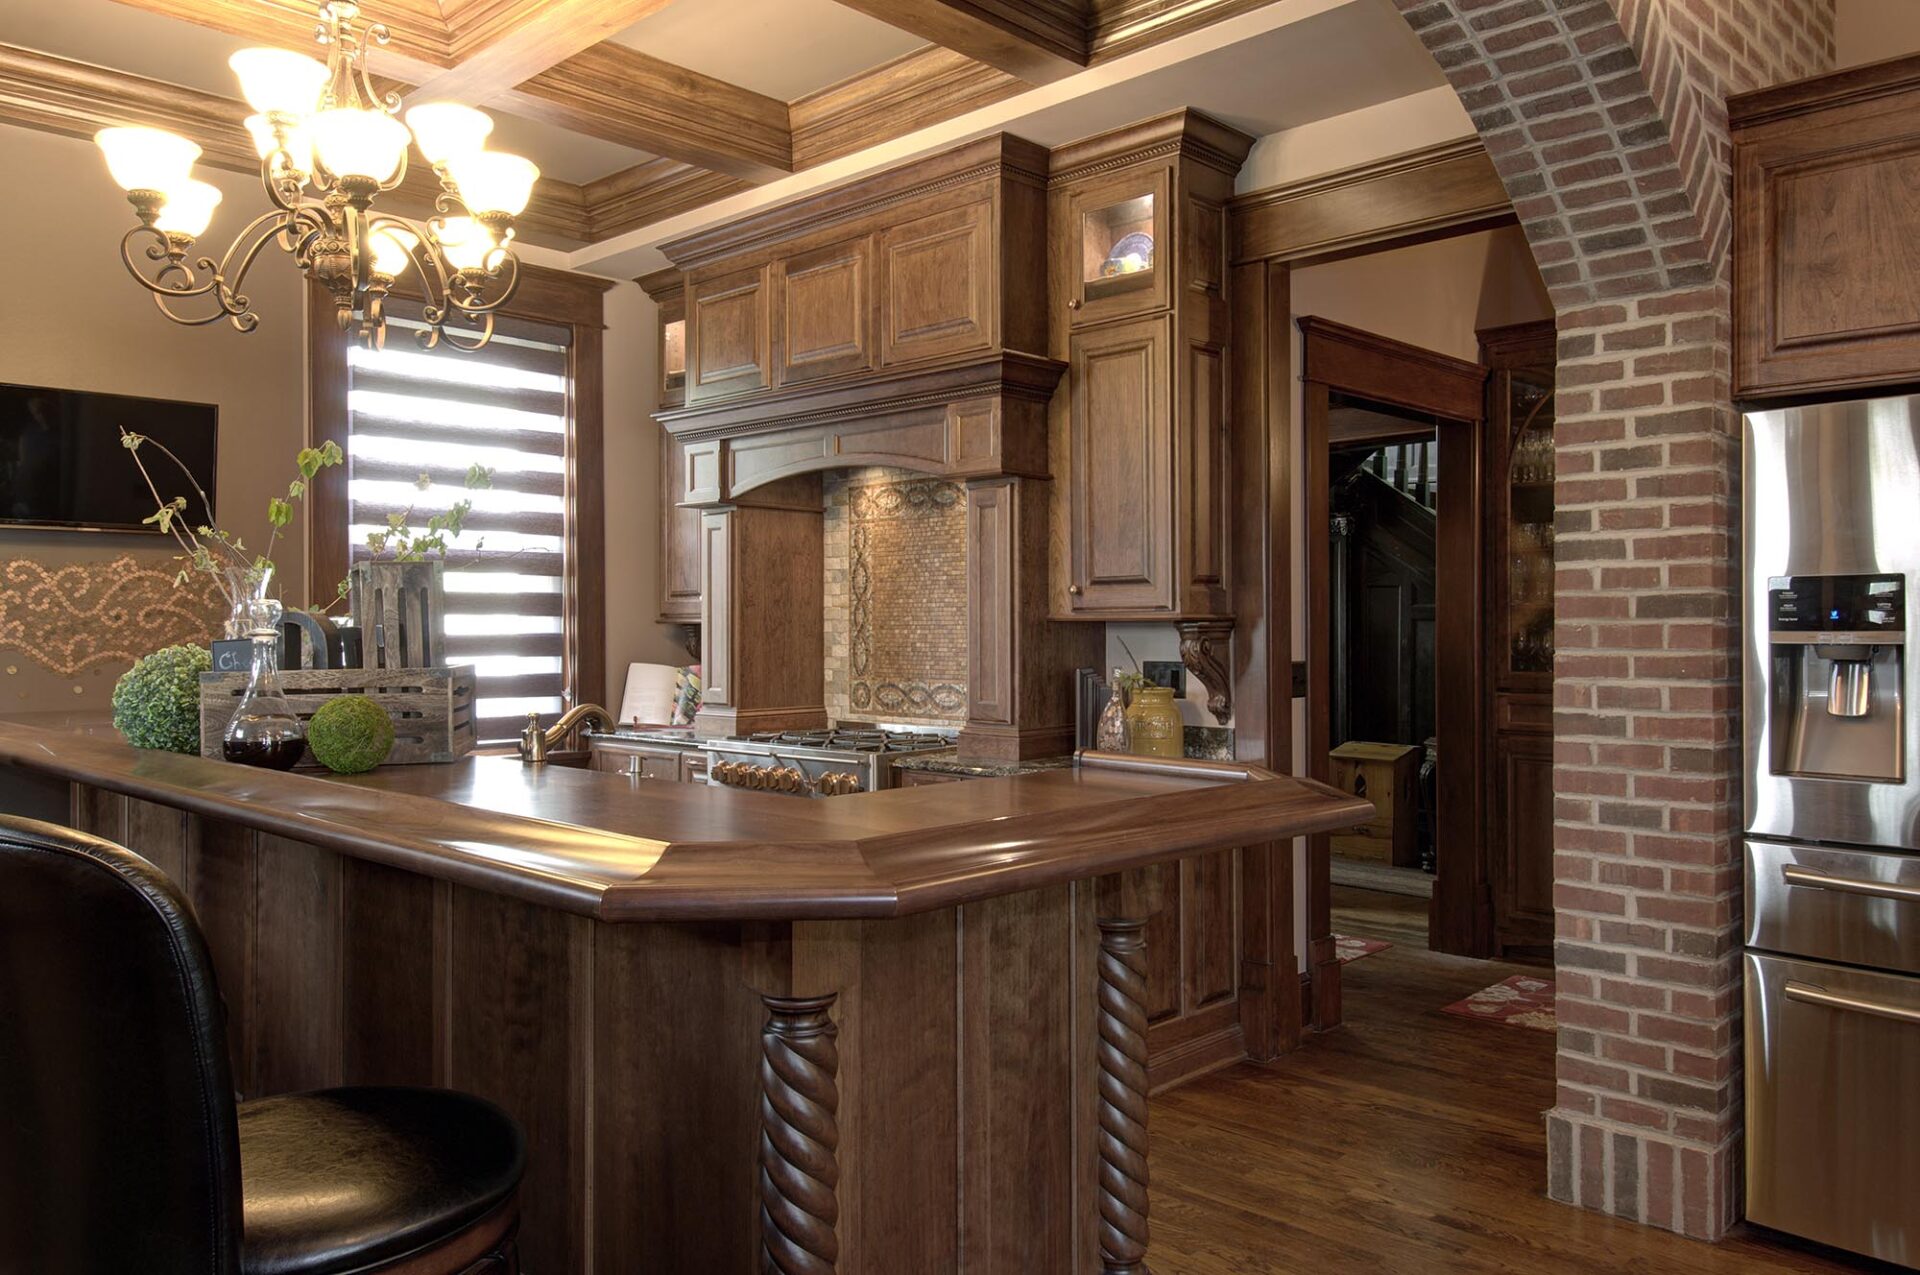 Kitchen design, Columbus, Dave Fox, Remodel, coffered ceilings, brick, range, bronze, brass, bar